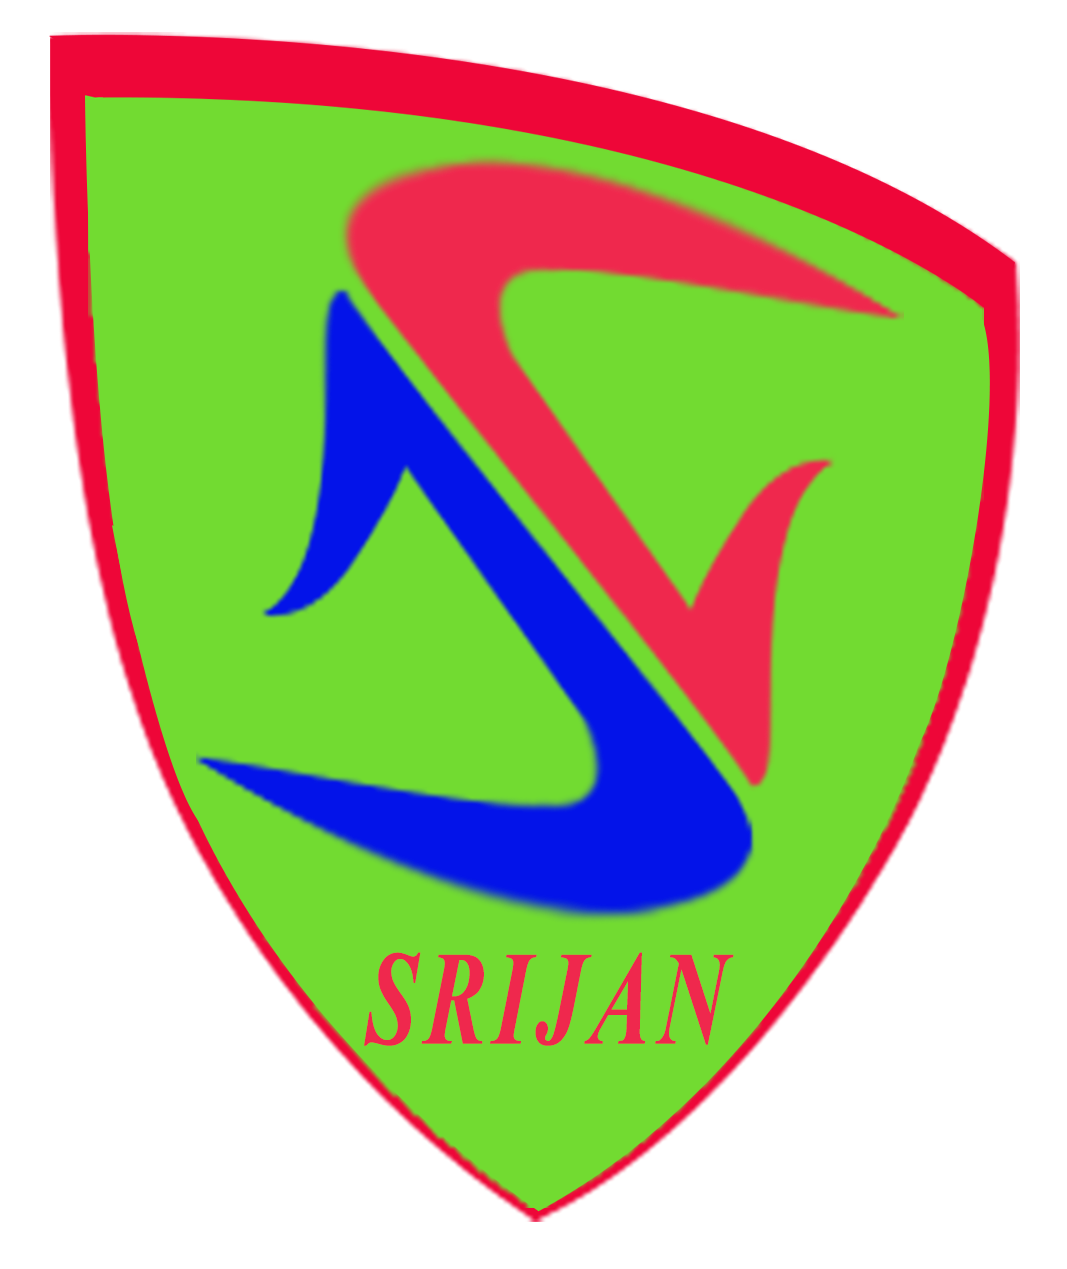 SRIJAN Company